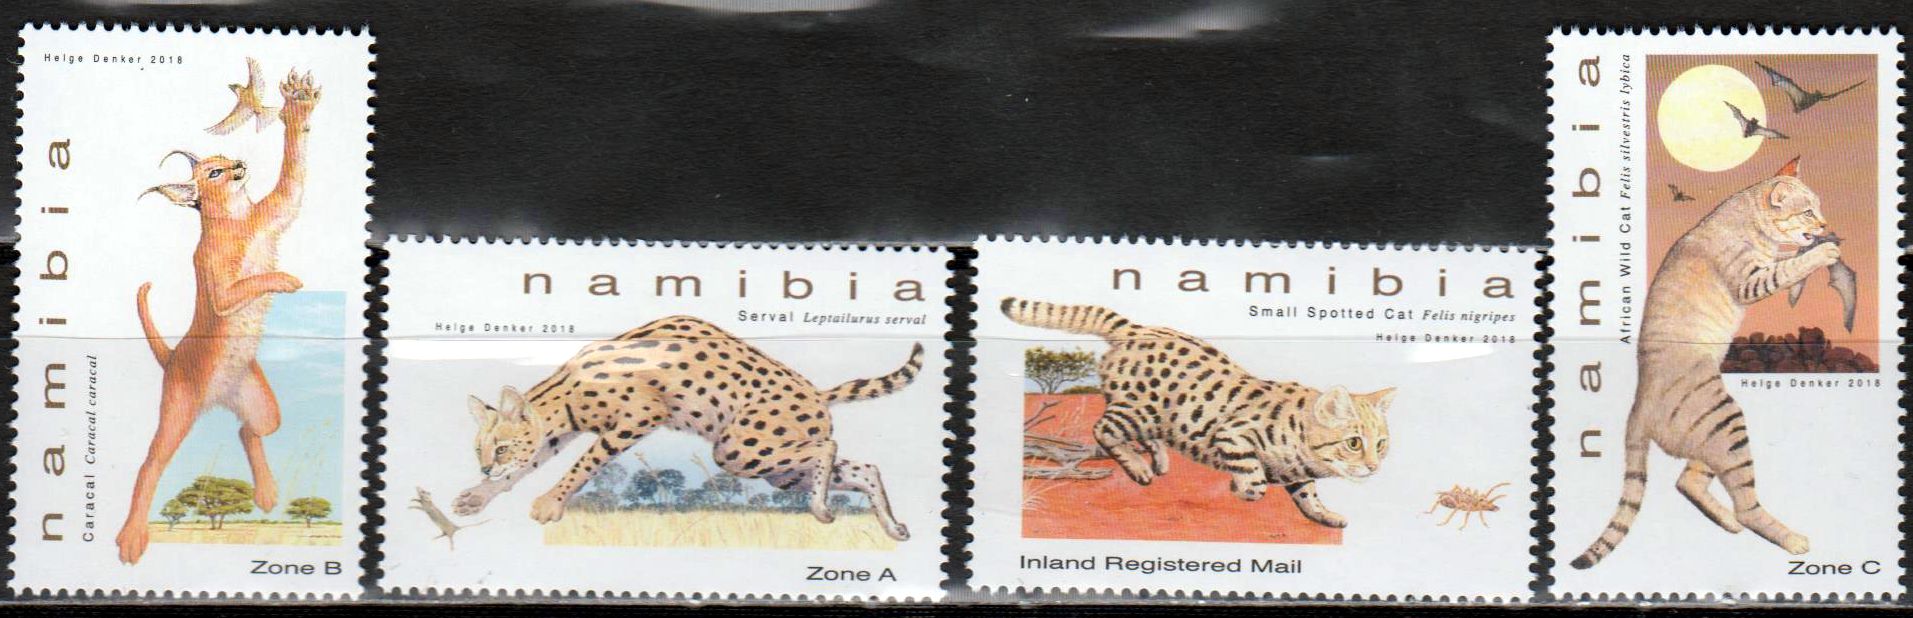 Klein Katzen von Namibia 2018